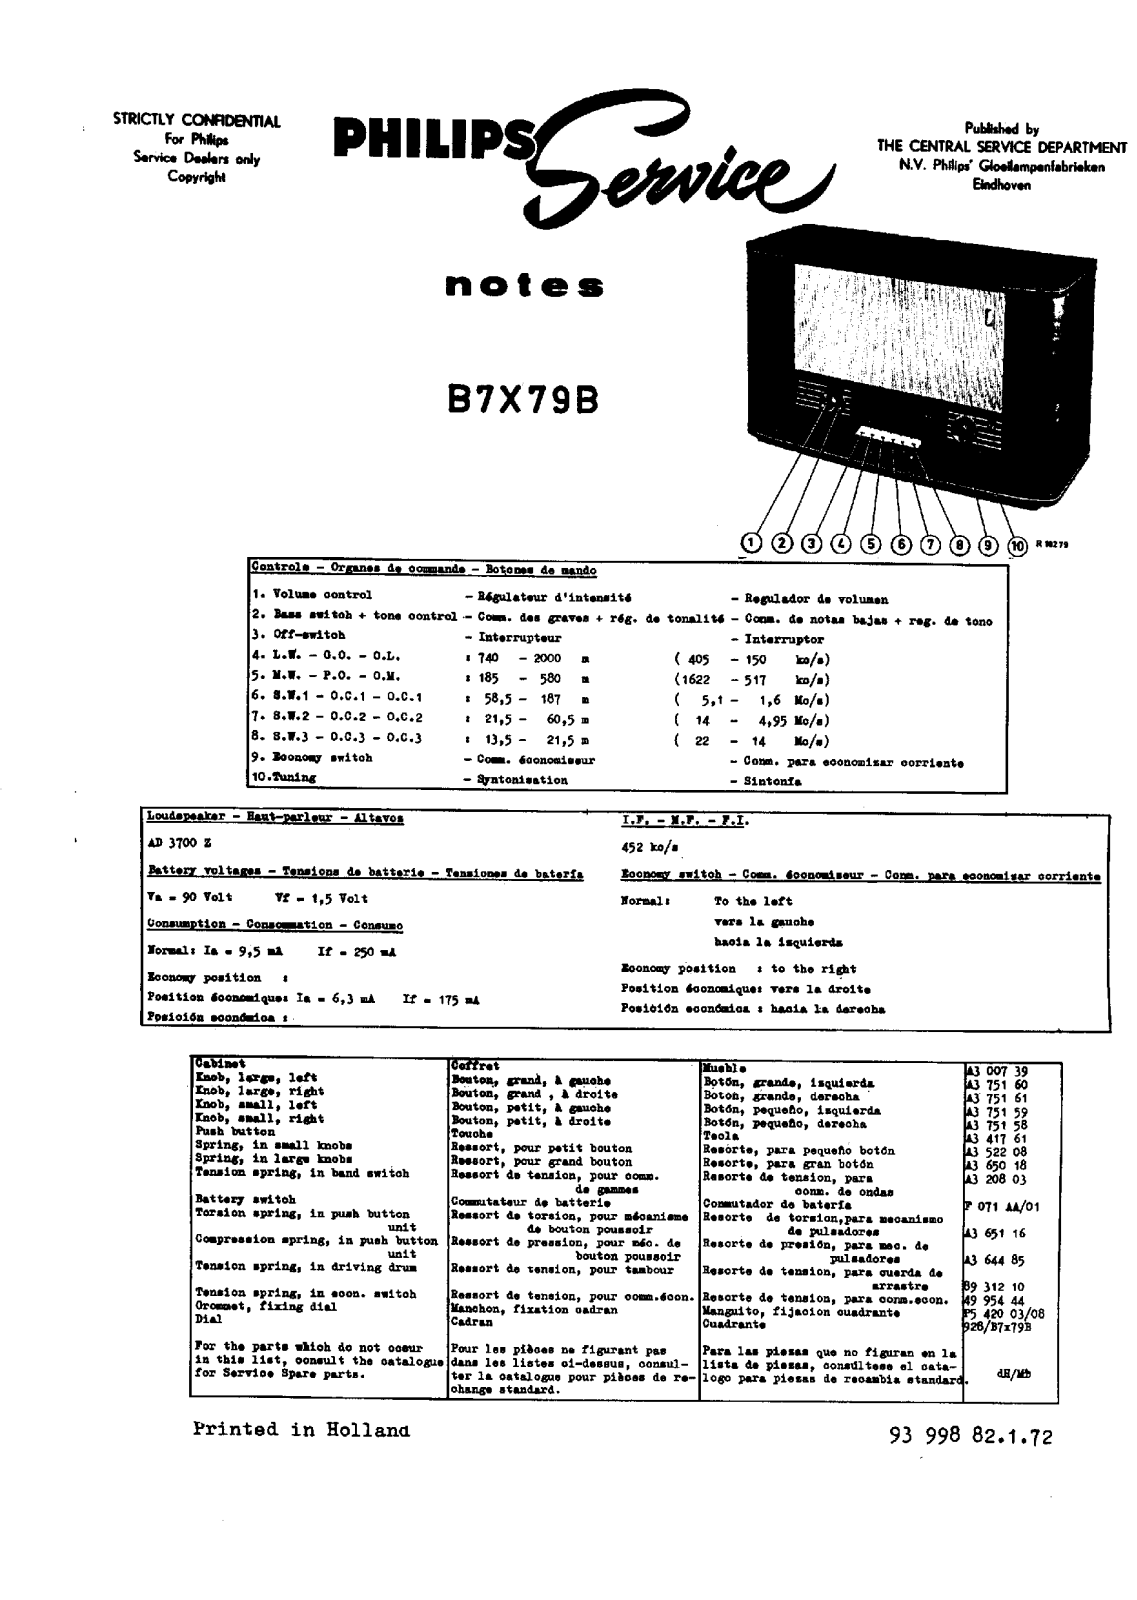 Philips B-7-X-79-B Service Manual